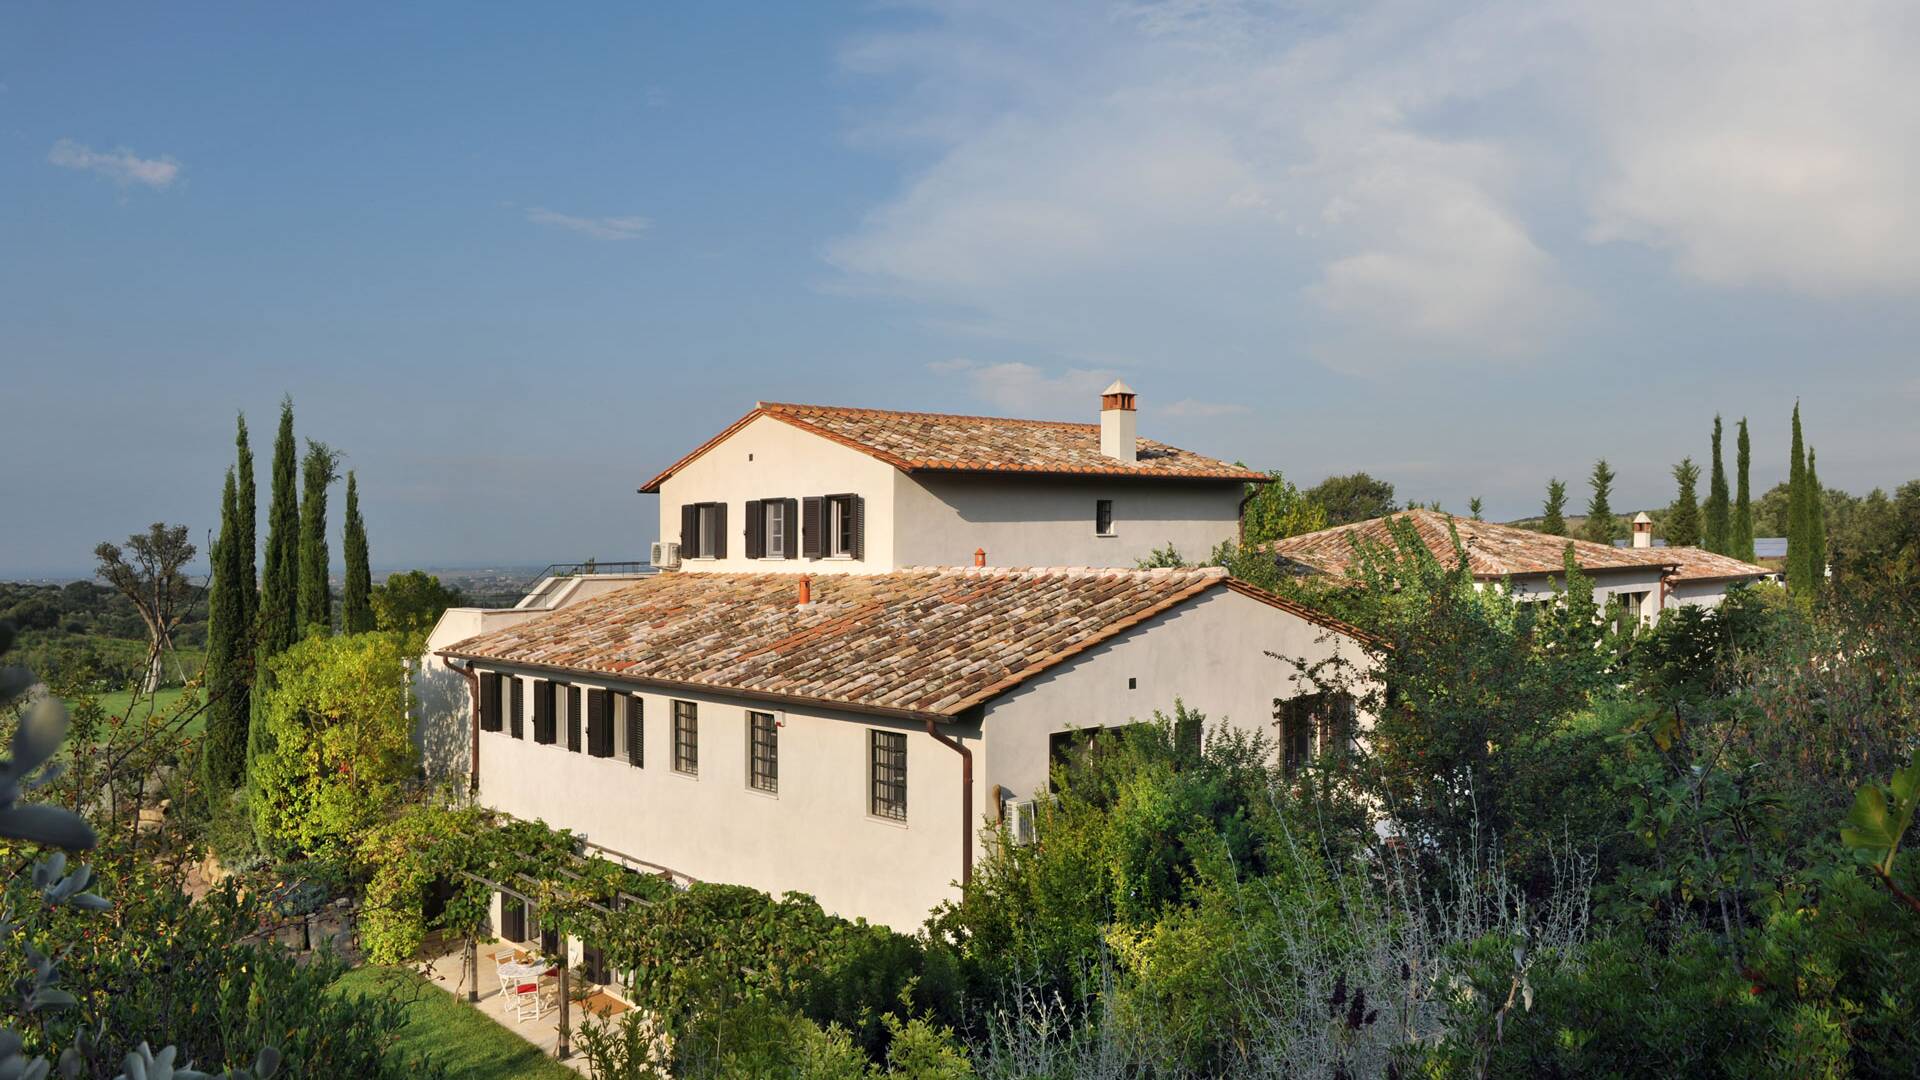 luxury villa Andromeda located in Capalbio